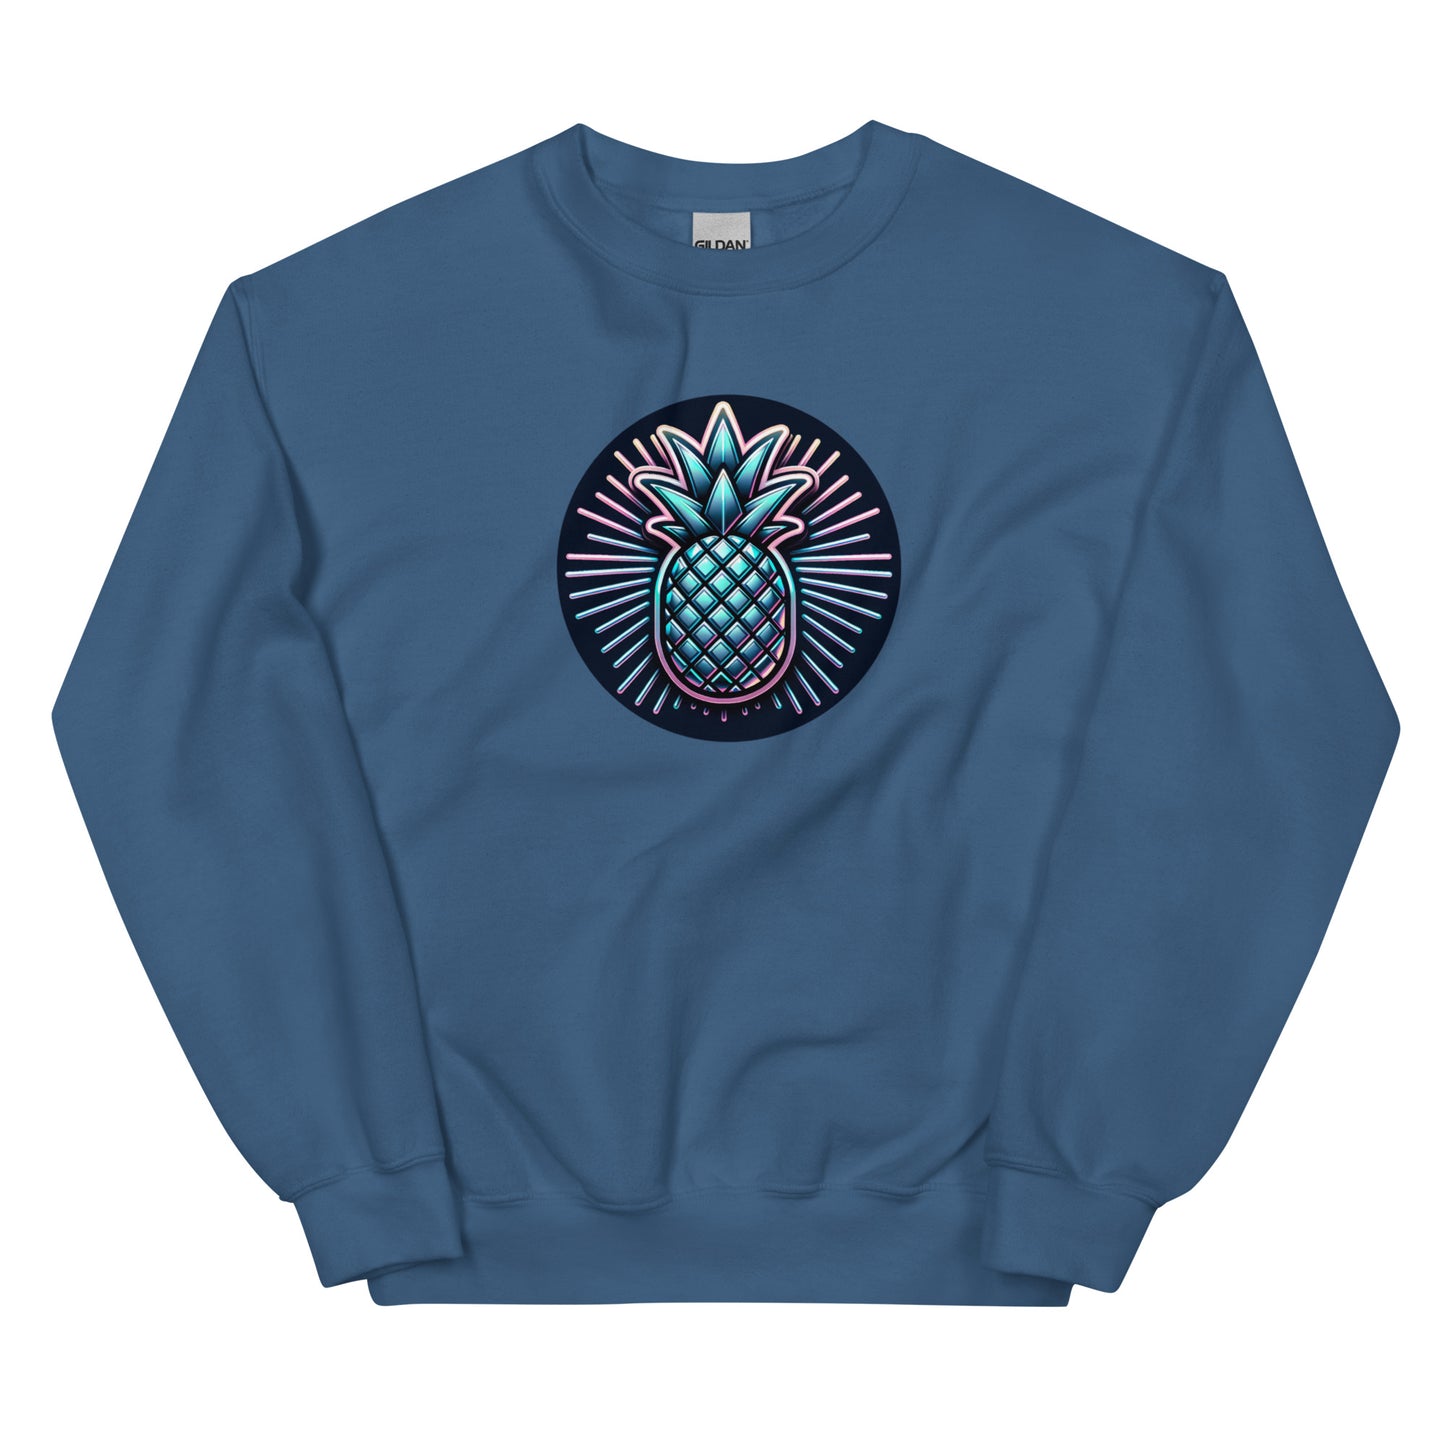 Shopijo’s Cool Graphic Pineapples Unisex Sweatshirt